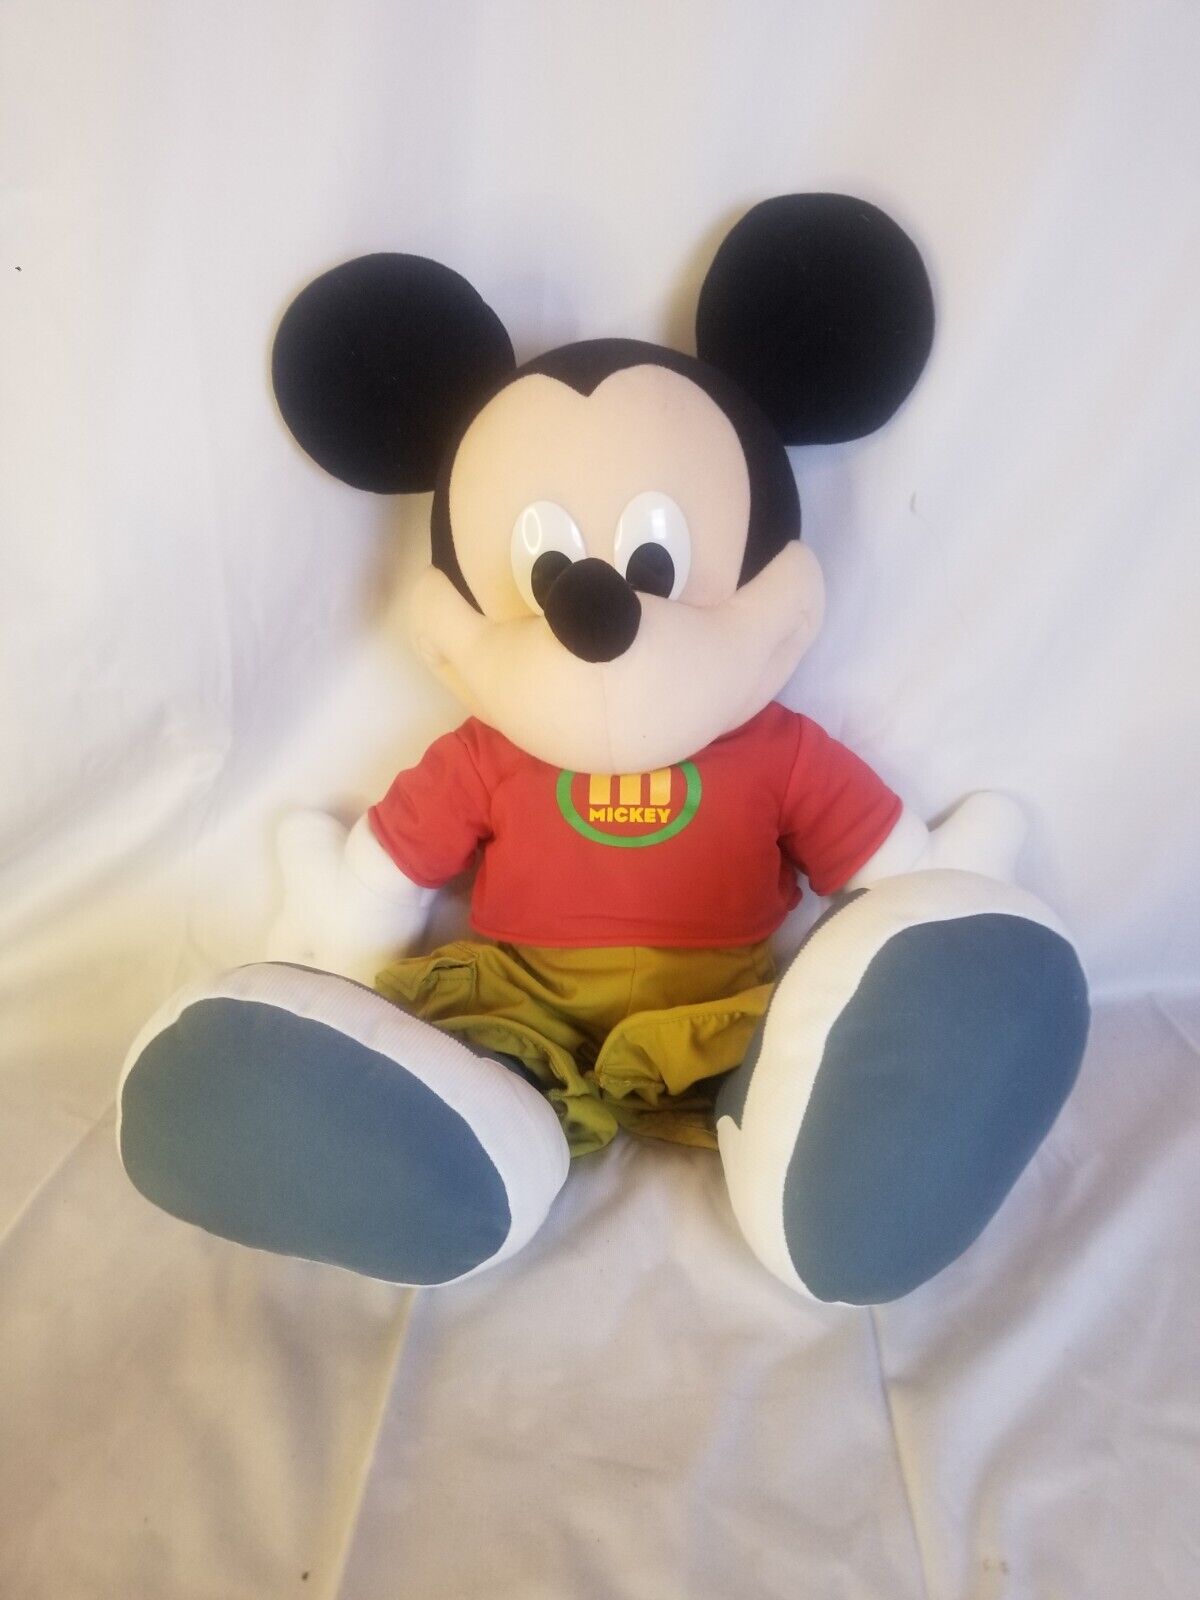 2000 Mattel Jumbo Mickey Mouse Fisher-Price Disney Stuffed Plush